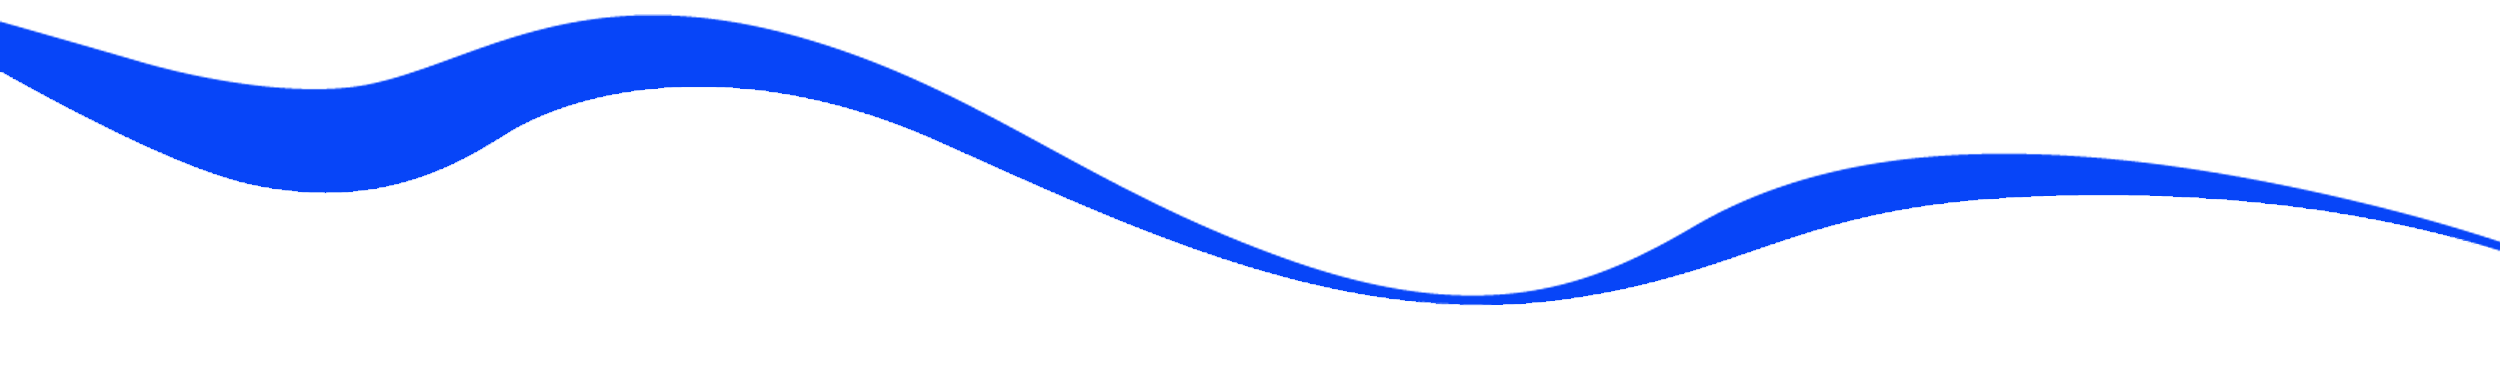 Blue wave